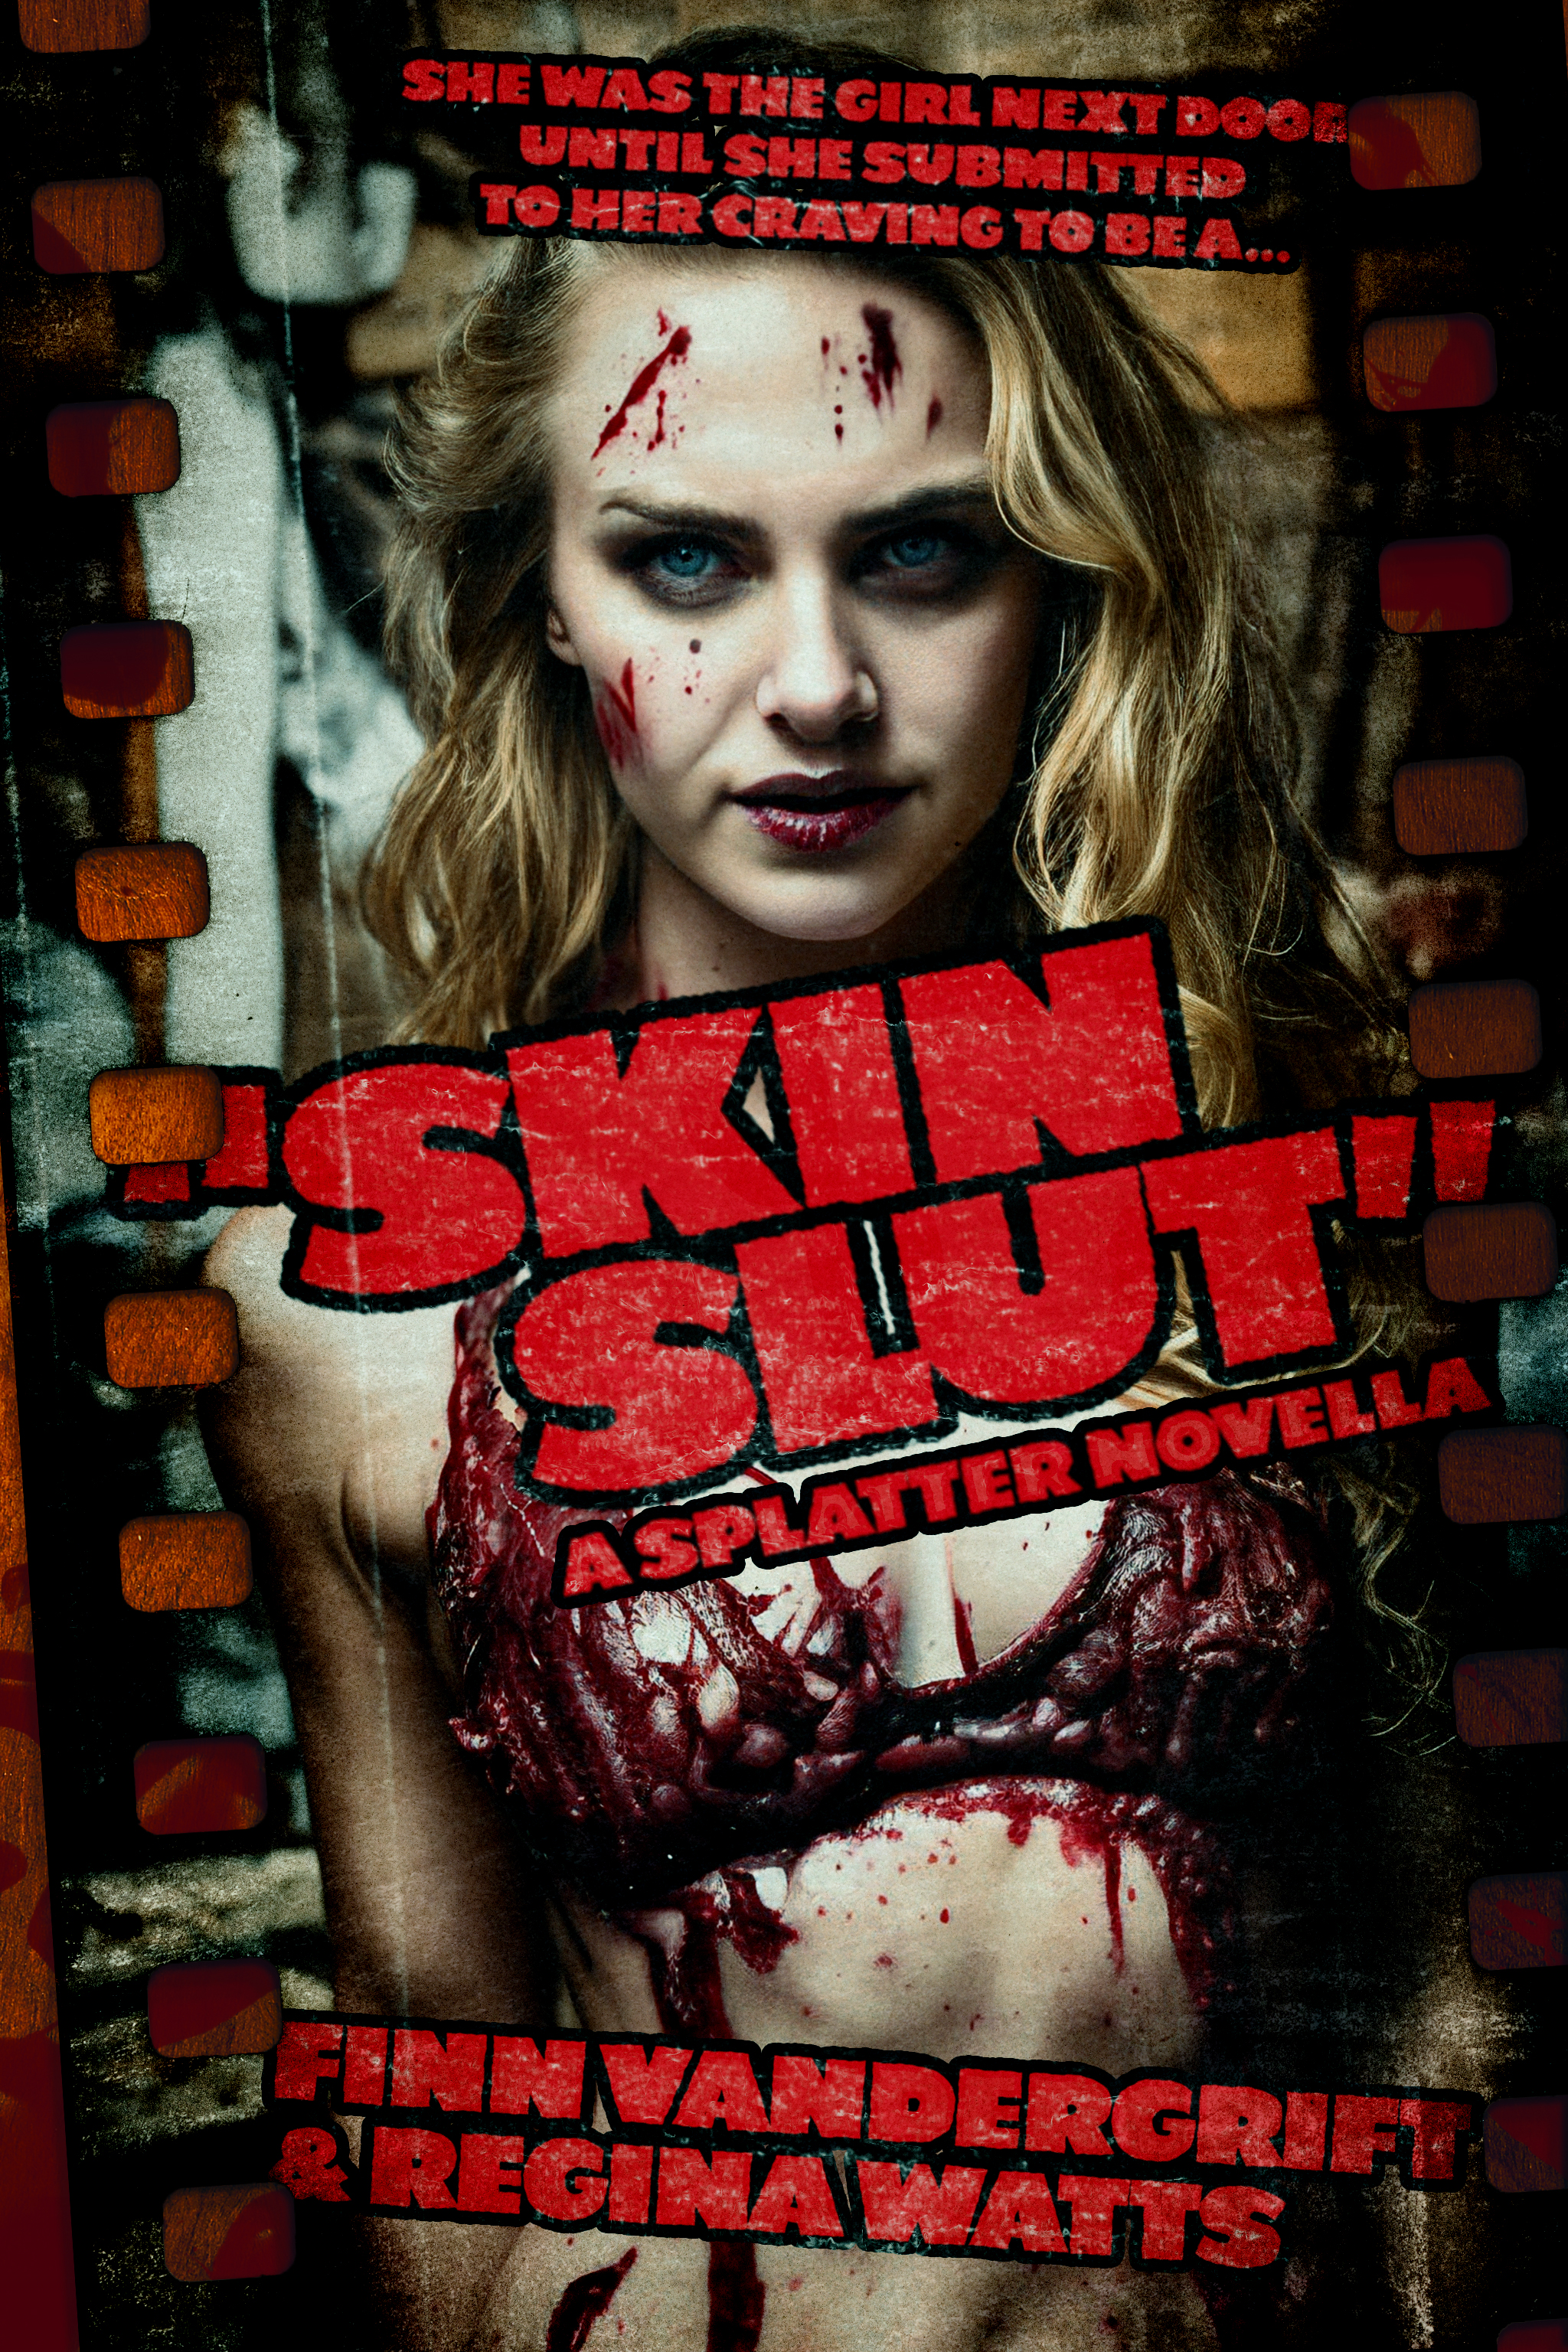 Cover for 'Skinslut' by Finn Vandergrift and Regina Watts, a blonde woman wearing a meat bikini